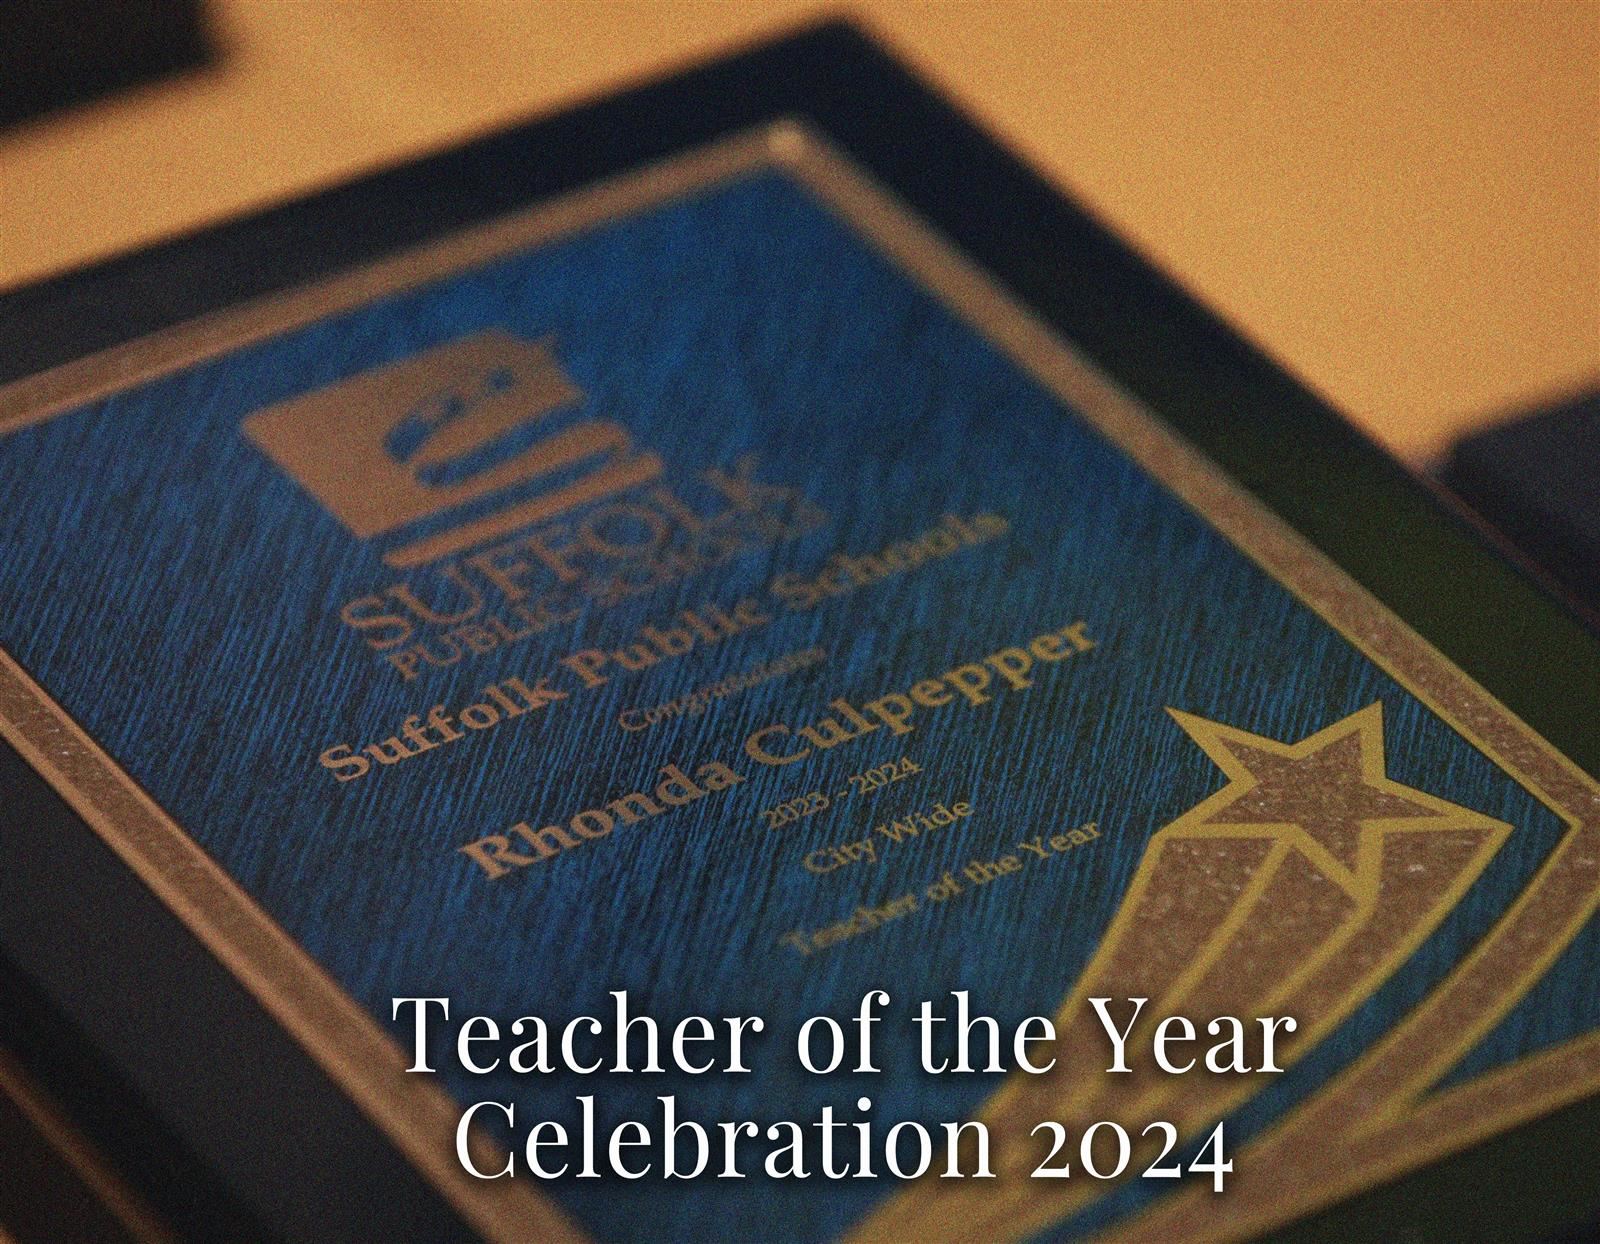  Administrator & Teacher of the Year Celebration 2024